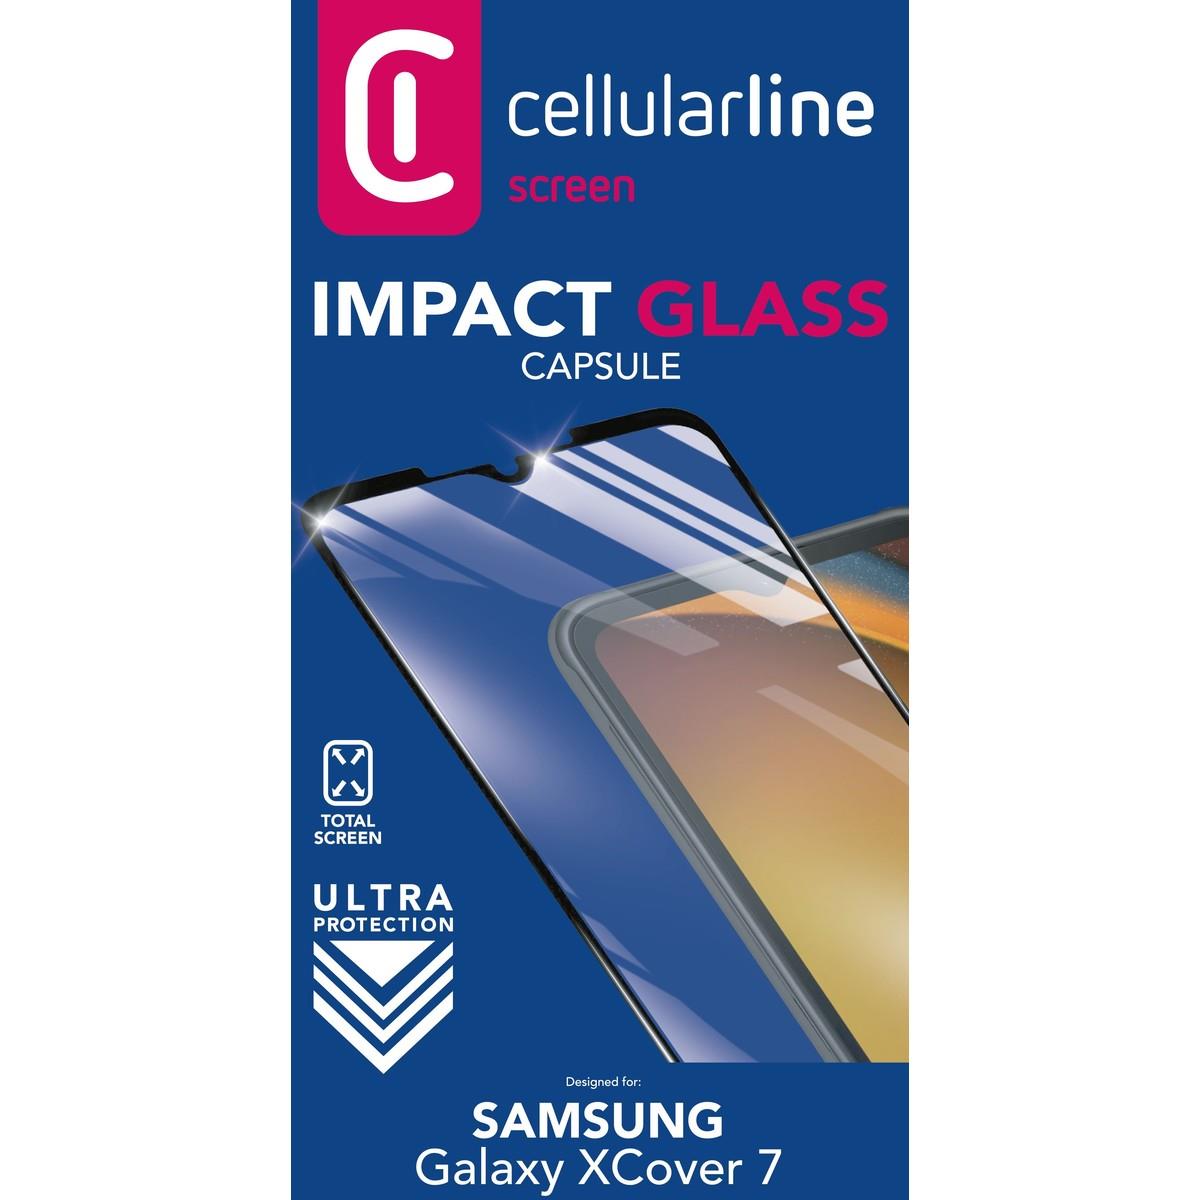 Schutzglas IMPACT GLASS CAPSULE für Samsung Galaxy Xcover 7